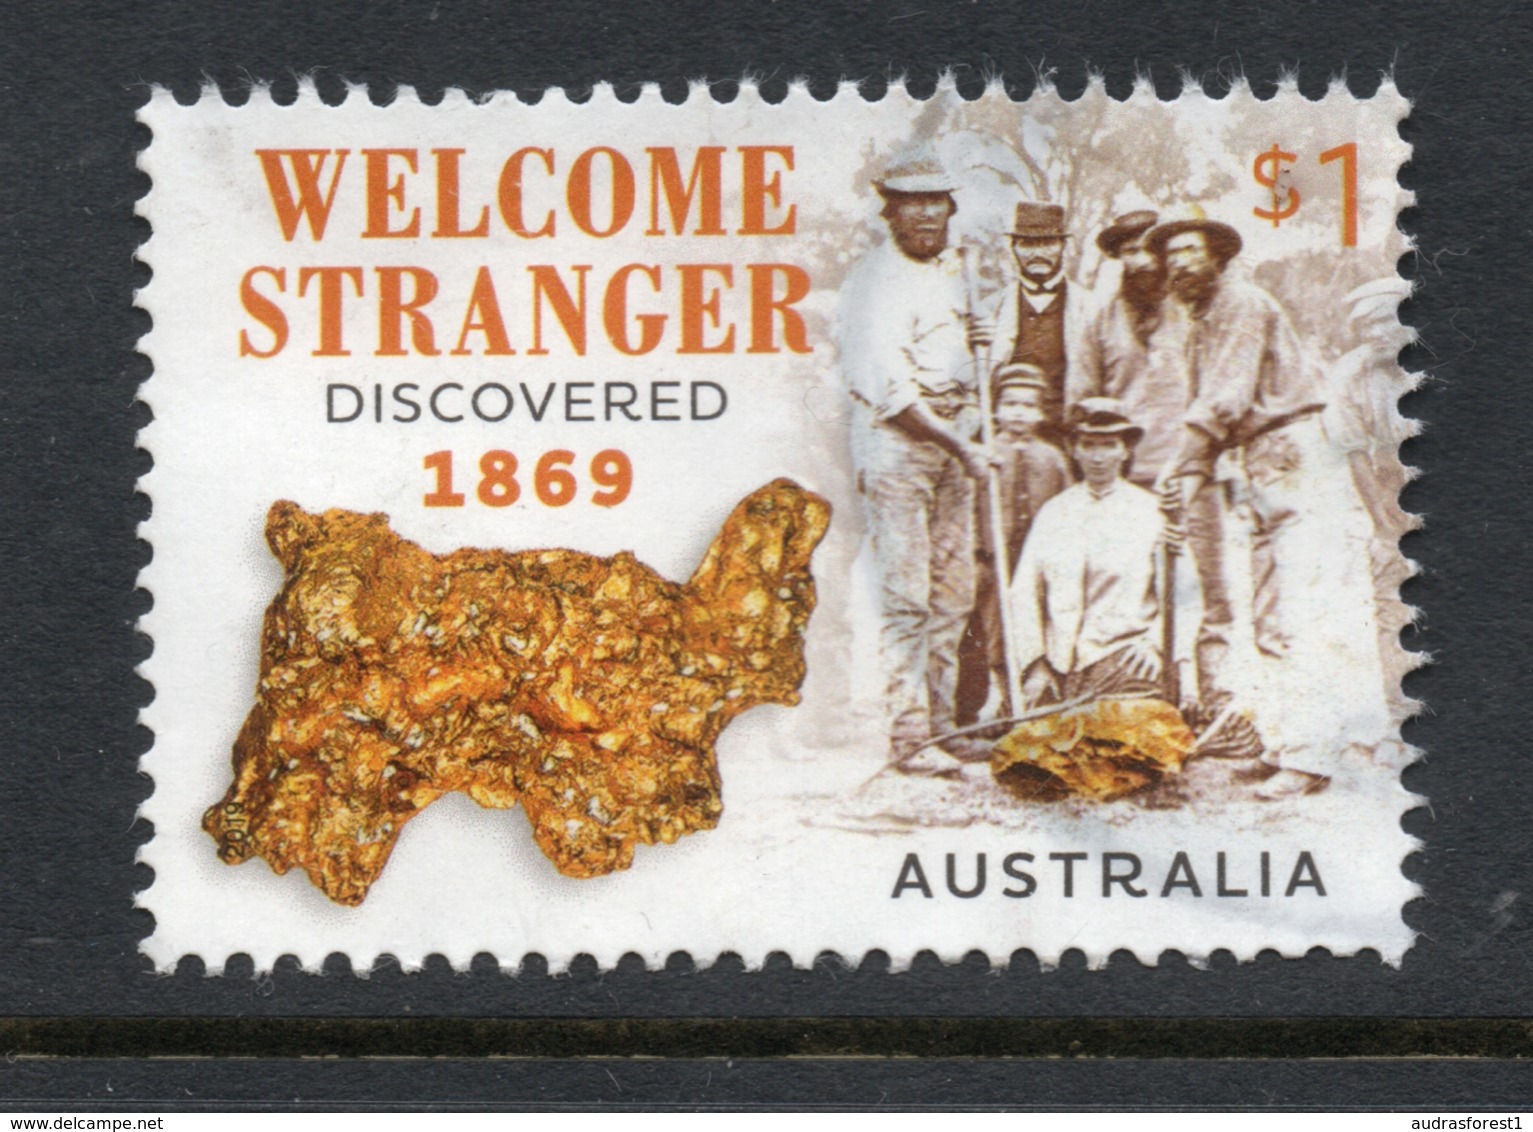 2019 AUSTRALIA GOLD Nugget WELCOME STRANGER VERY FINE POSTALLY USED SHEET STAMP - Oblitérés